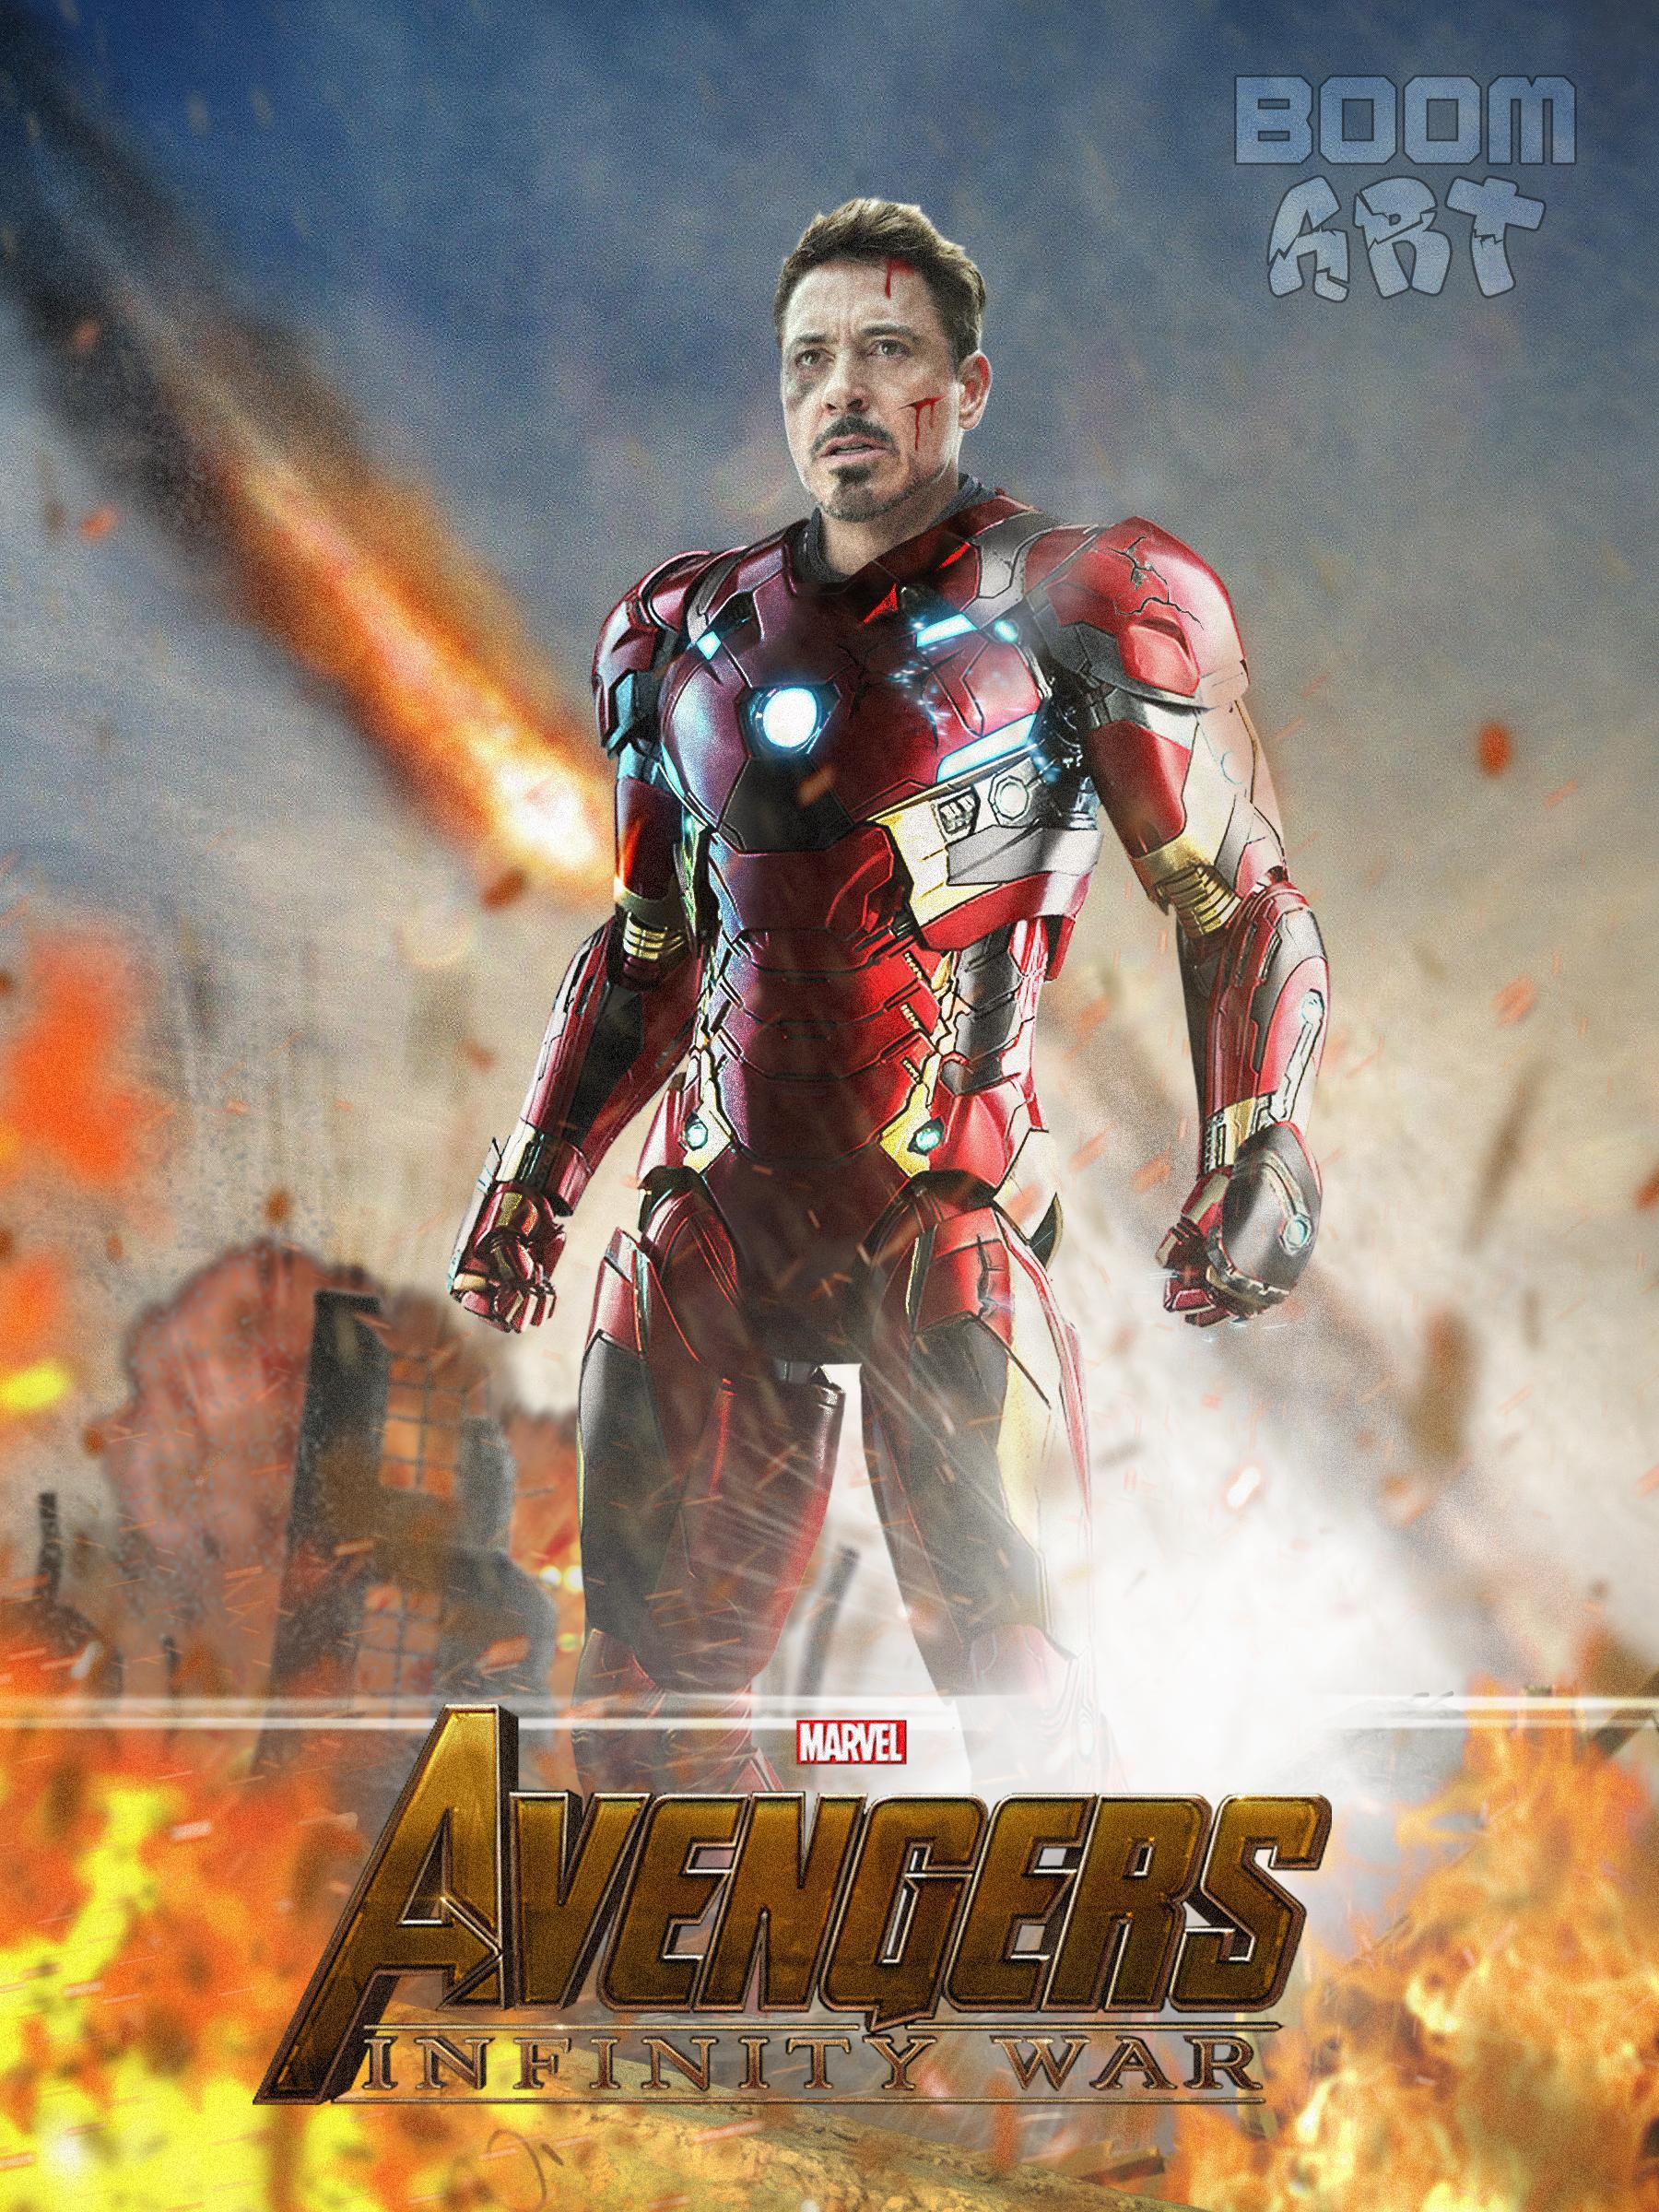 Iron Man INFINITY WAR Poster